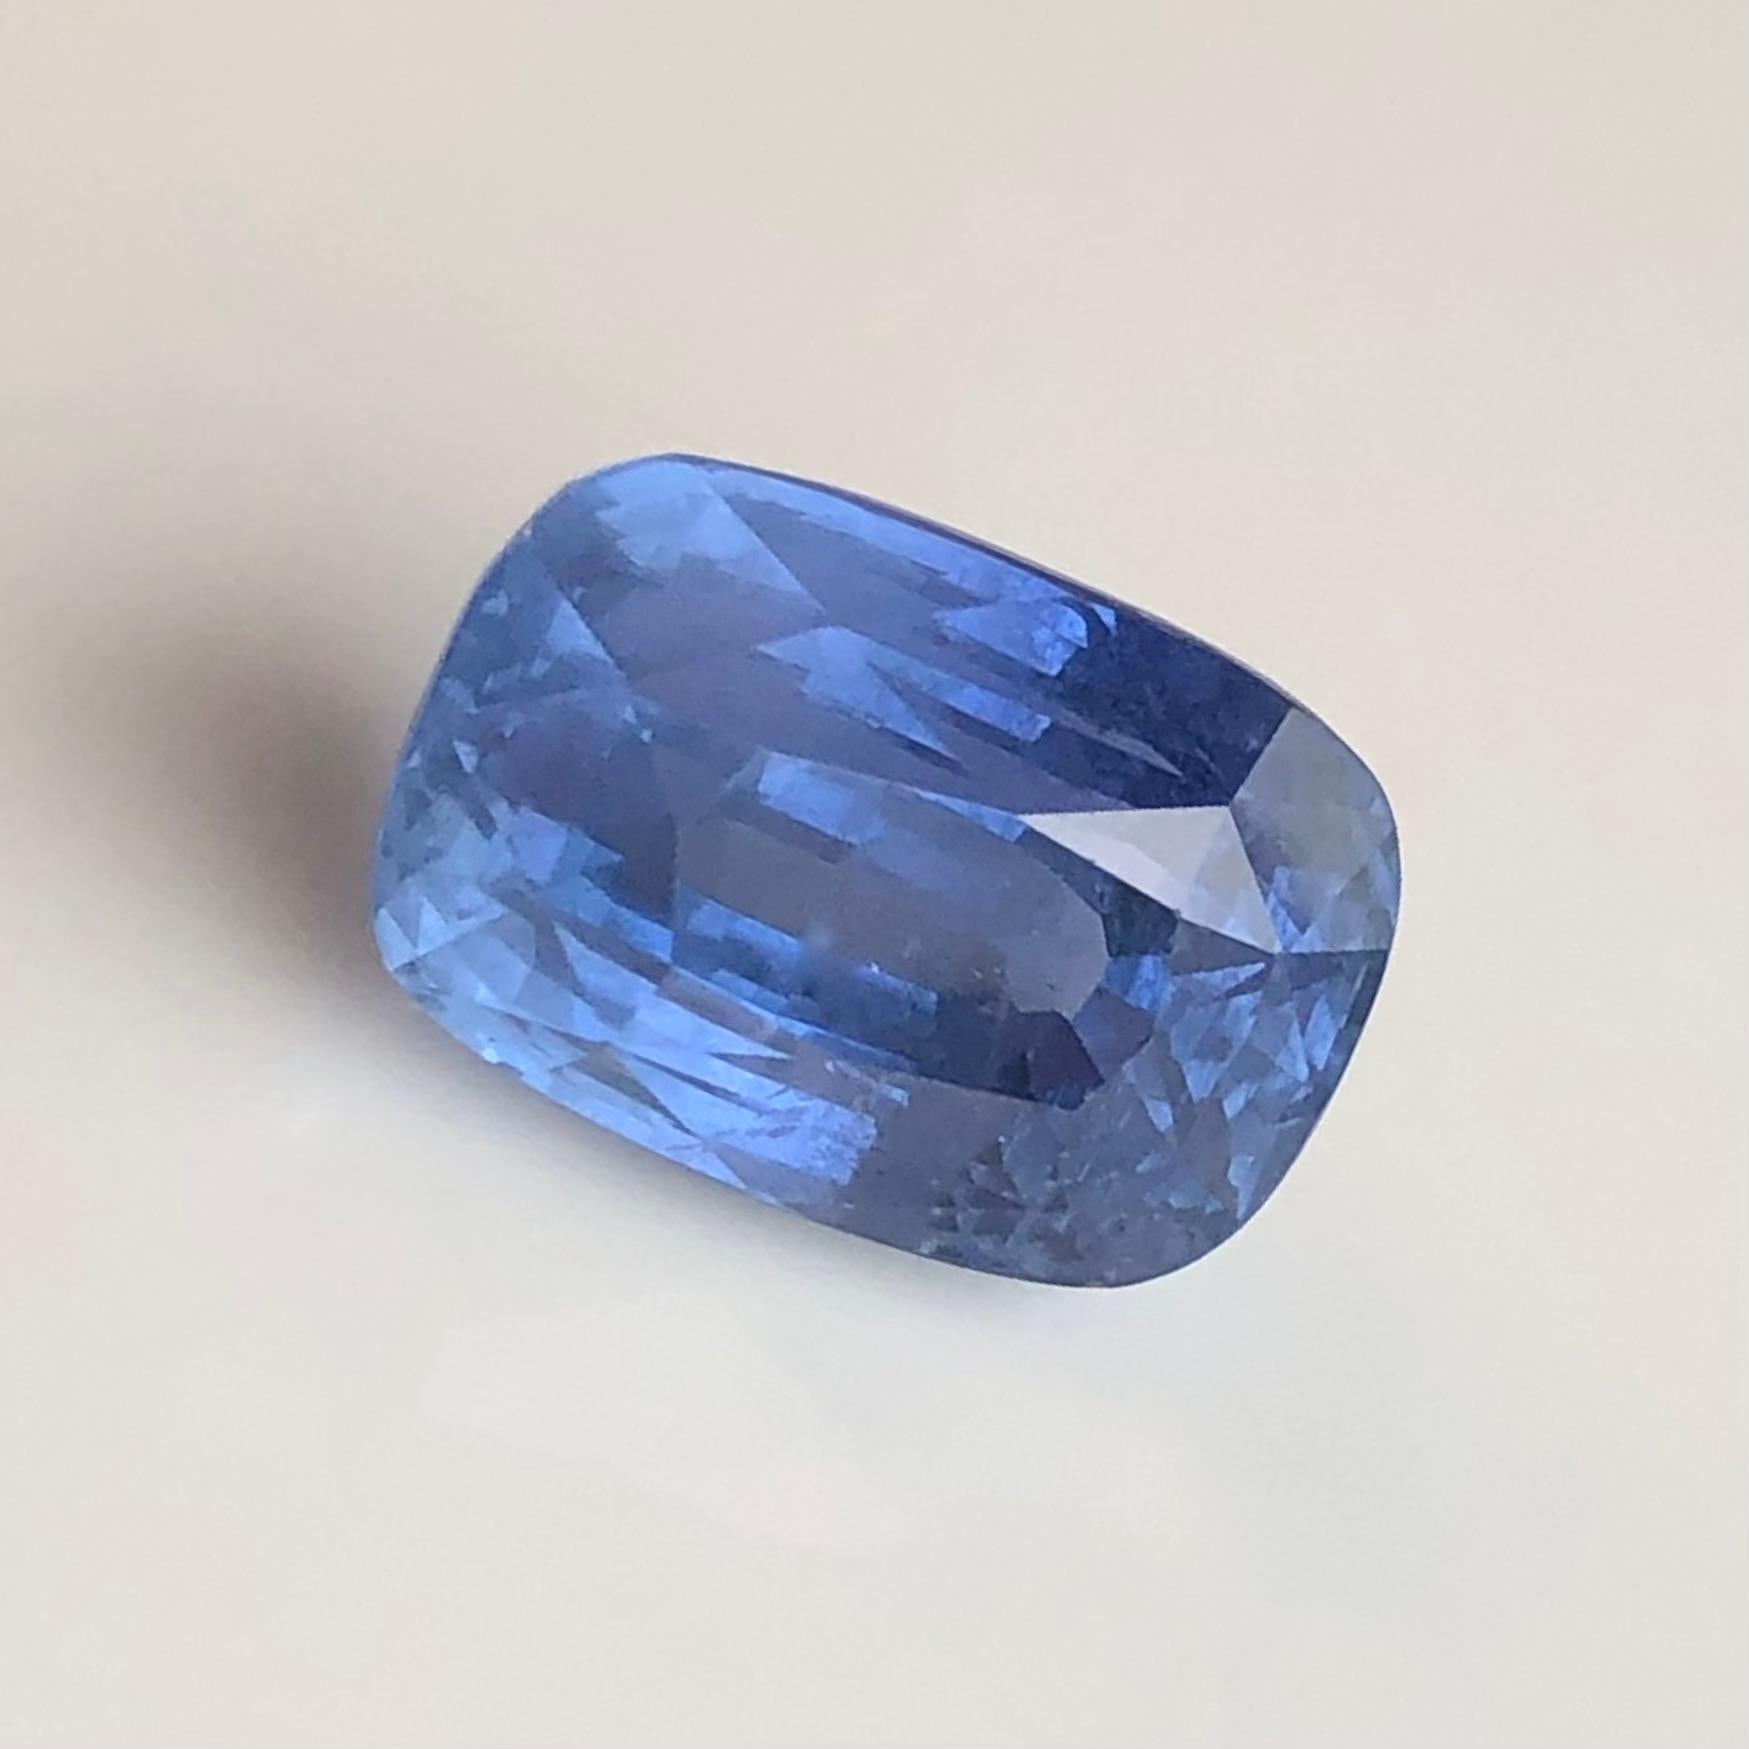 Saphir bleu de Ceylan non chauffé de 13,12 carats, pierre précieuse en vrac, certifiée
Saphir bleu certifié de 13,12 carats du Sri Lanka (Ceylan) 
Pierre précieuse :	Saphir naturel
Poids carats :	13,12 Carats
Mesures :  13,88 x 9,51 x 9,37 mm